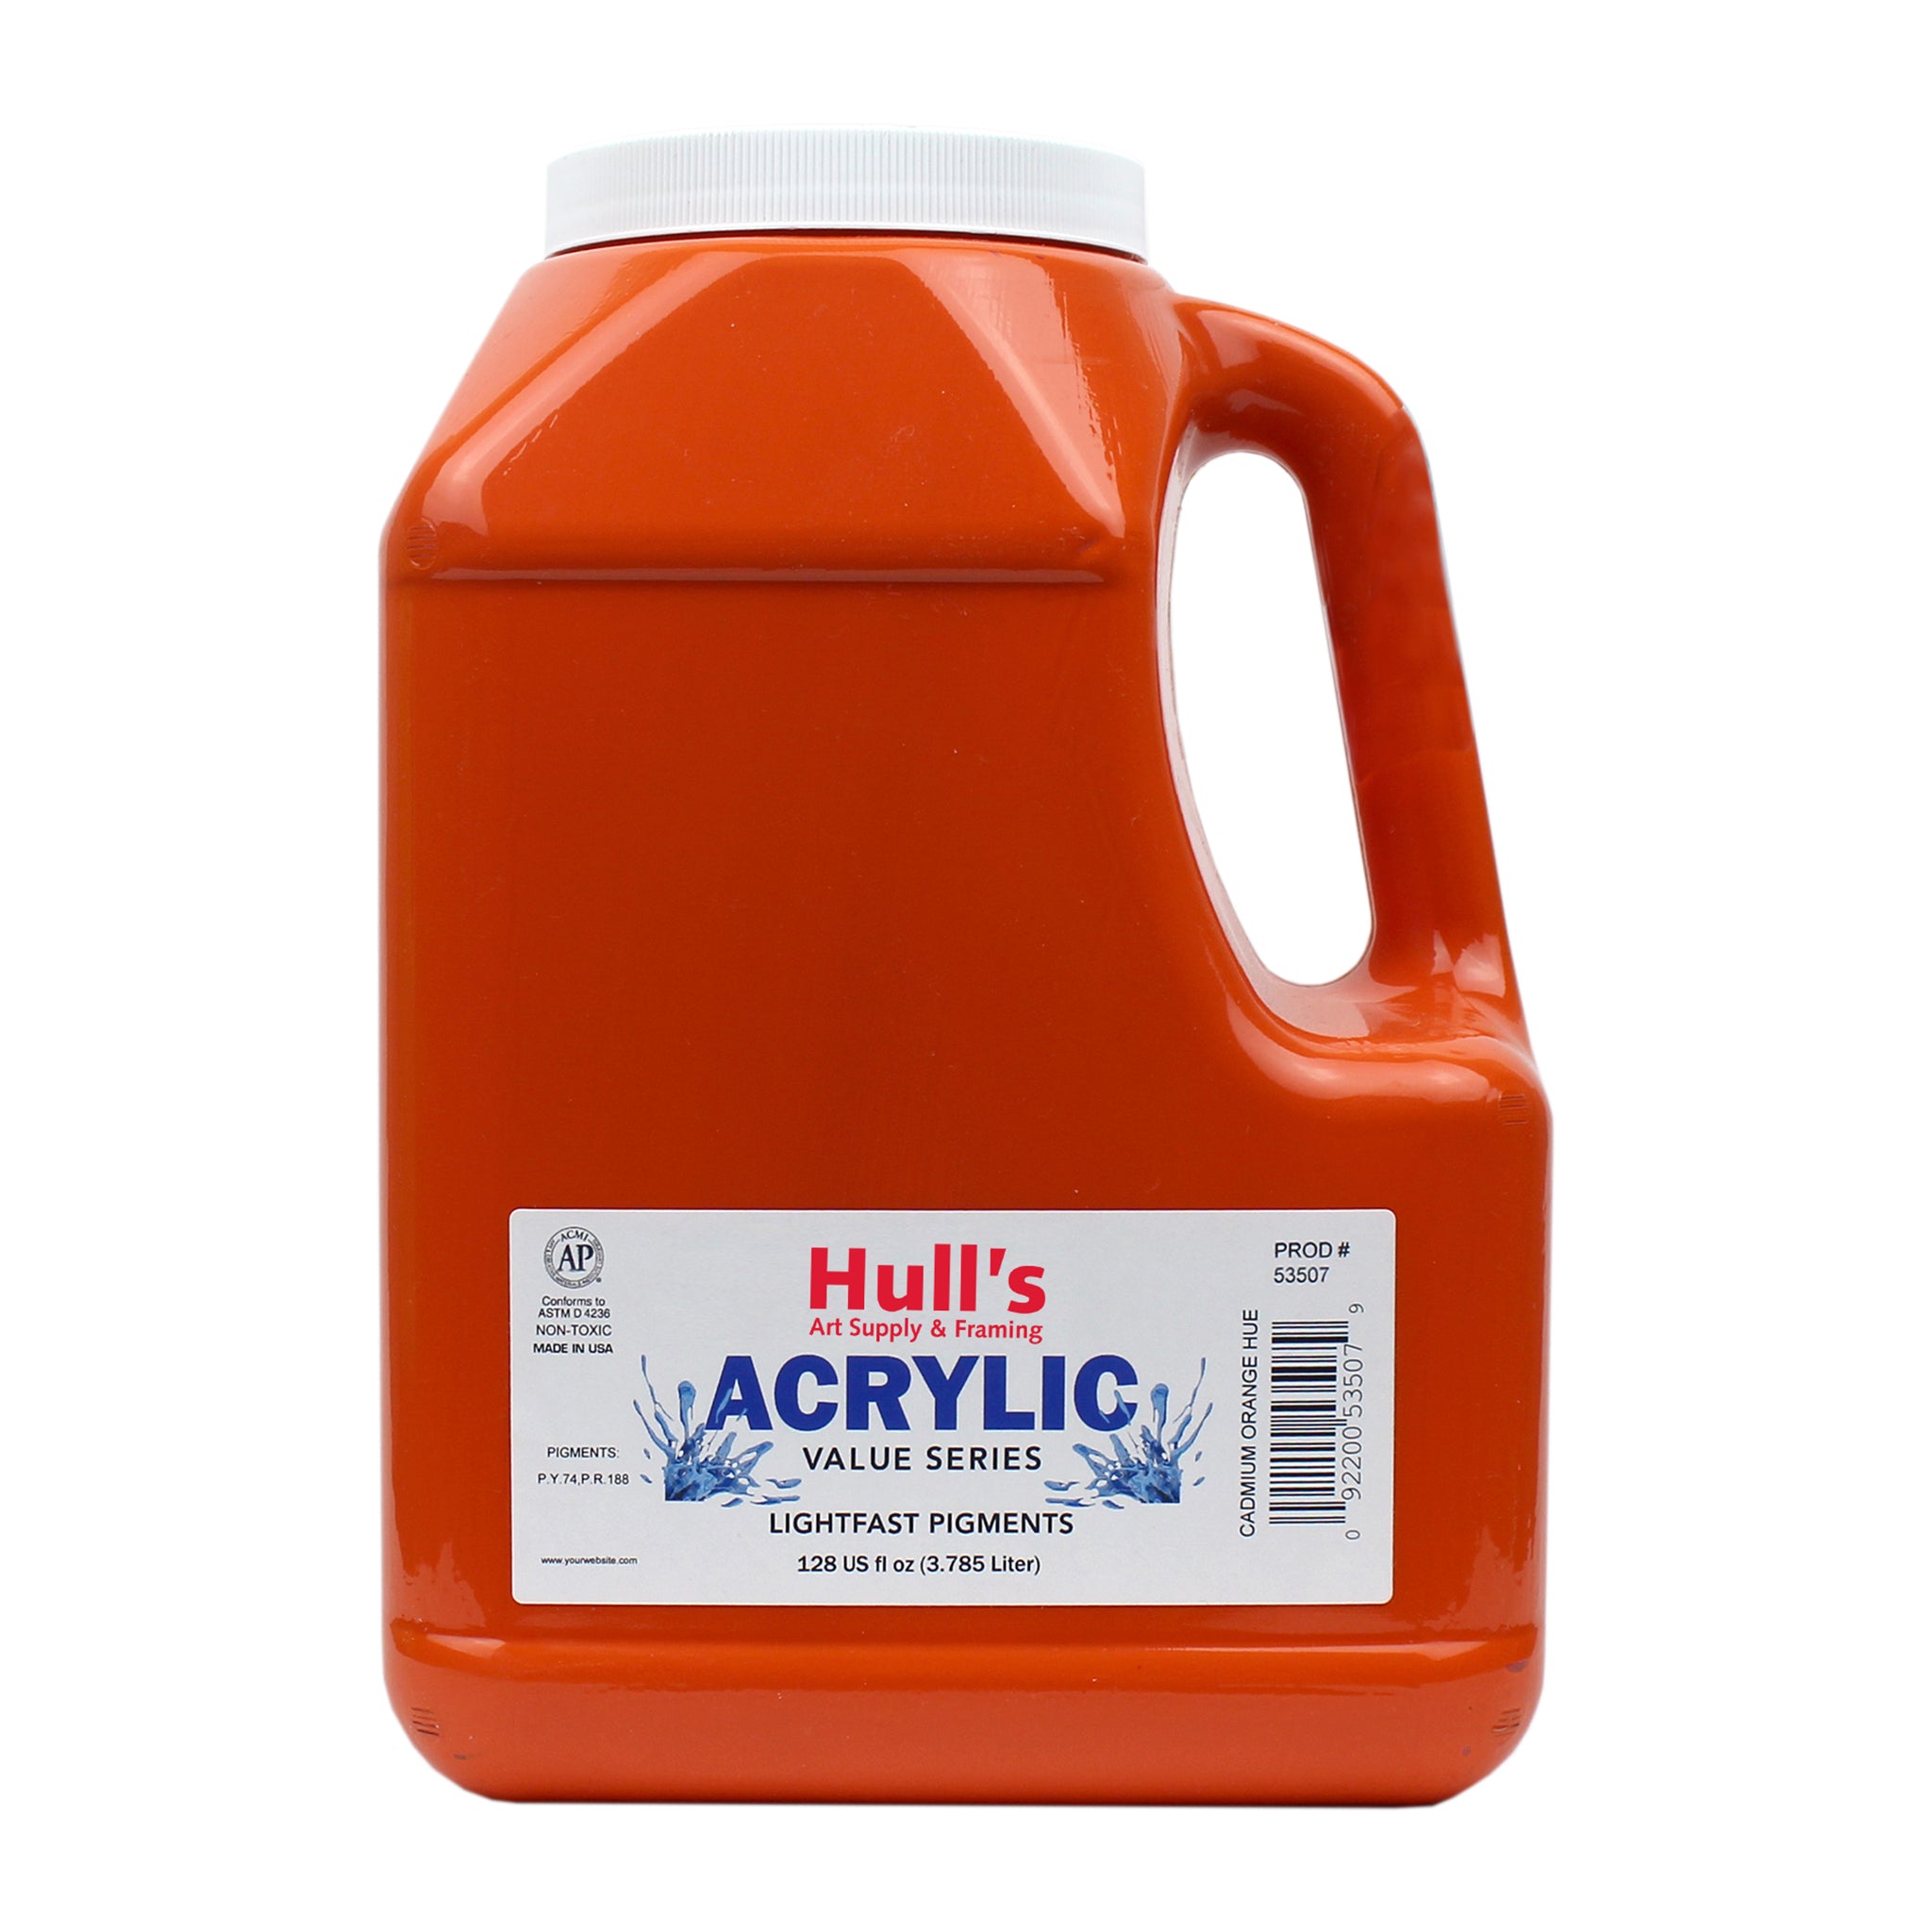 Hulls Acrylic Gallon Cadmium Orange Hue